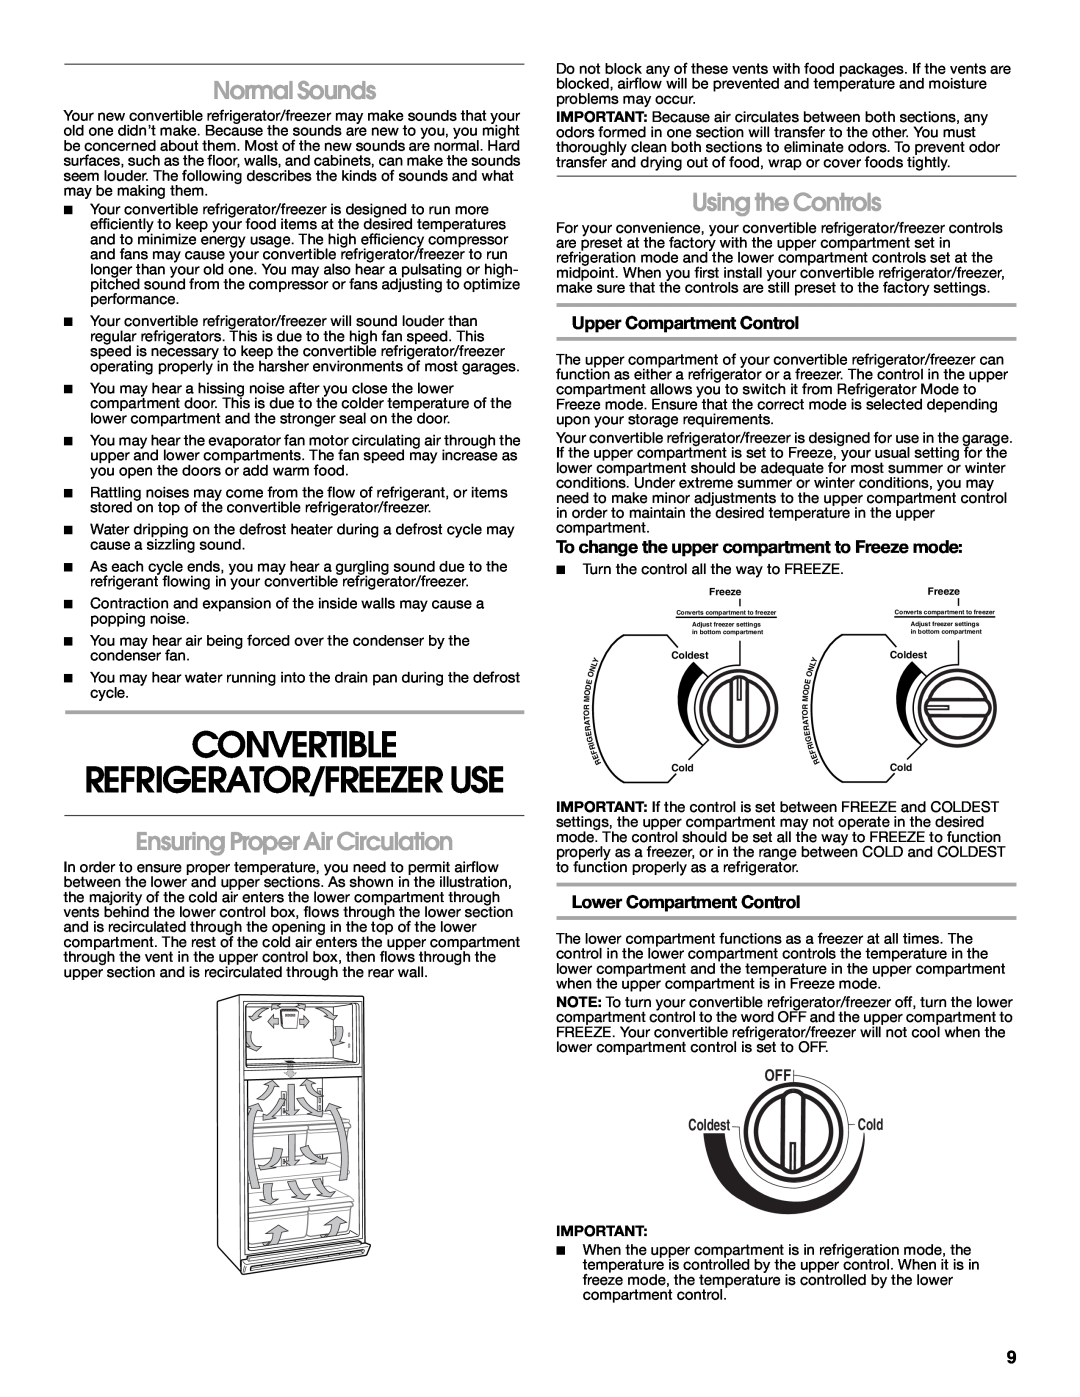 Whirlpool GAFZ21XXMK00 manual Convertible, Refrigerator/Freezer Use, Normal Sounds, Ensuring Proper Air Circulation 